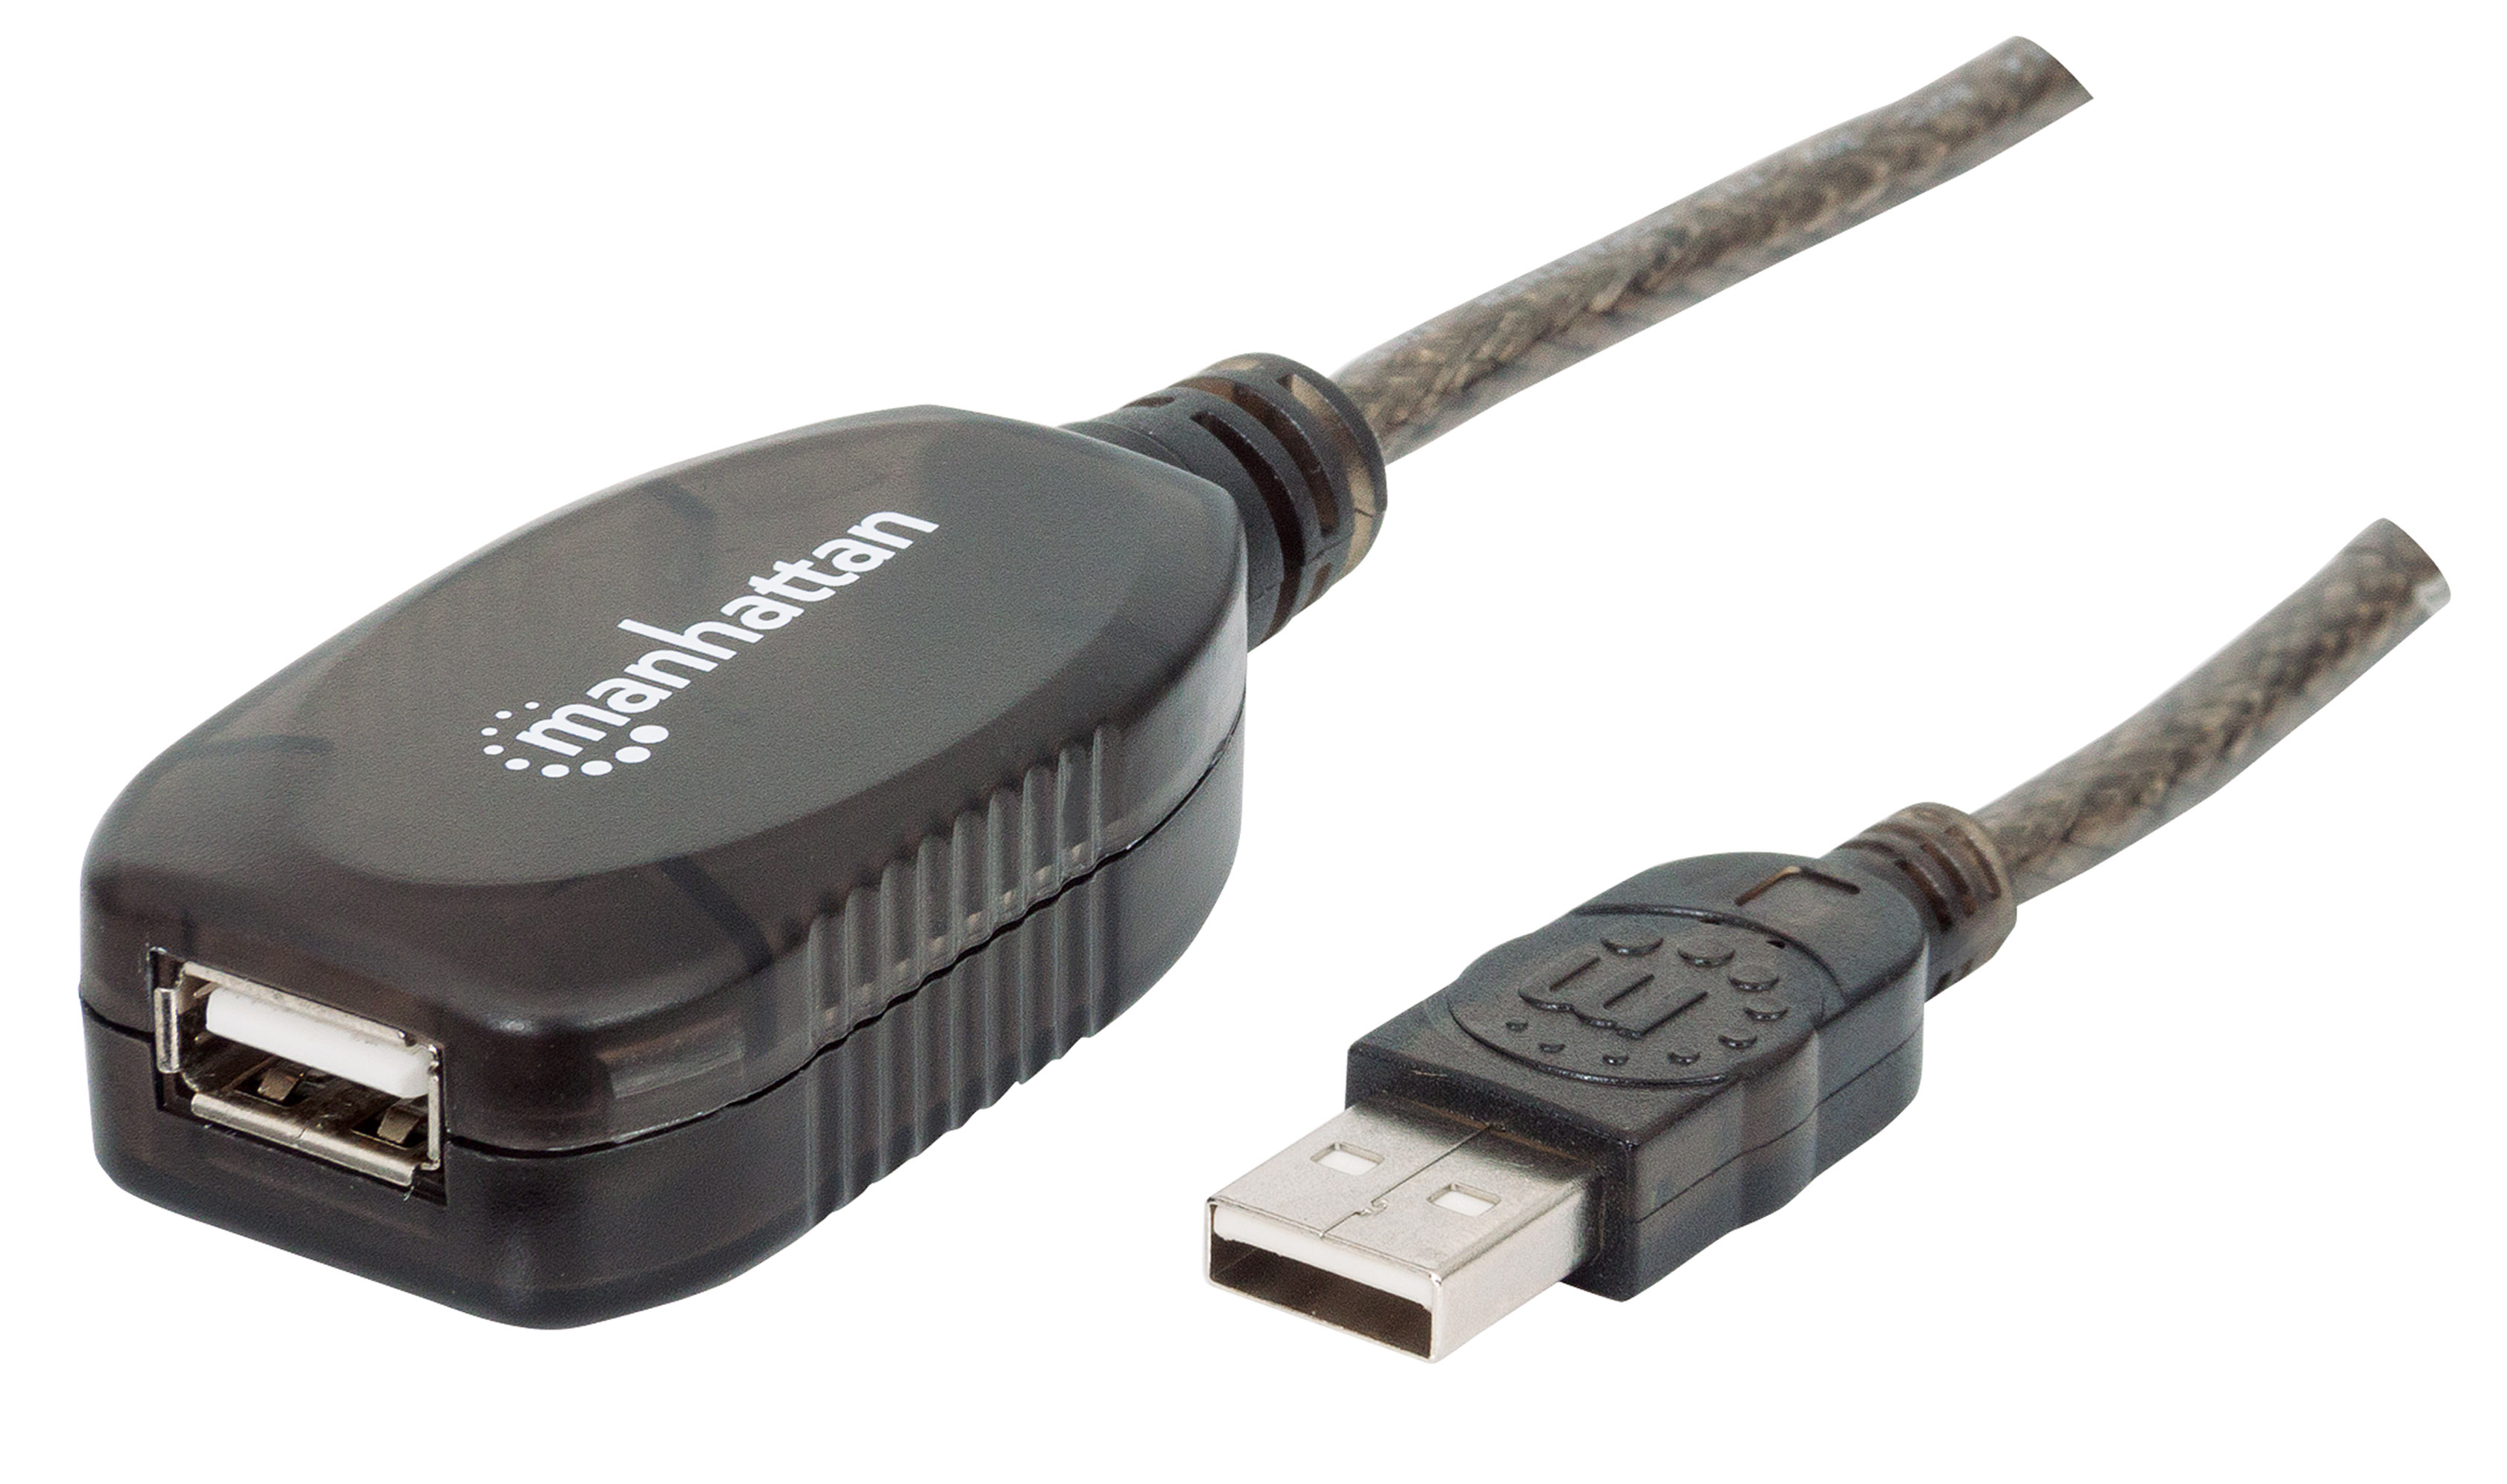  para PC/Laptop / Cables USB / CABLE USB V2.0 Ext. Activa 10.0M Bolsa